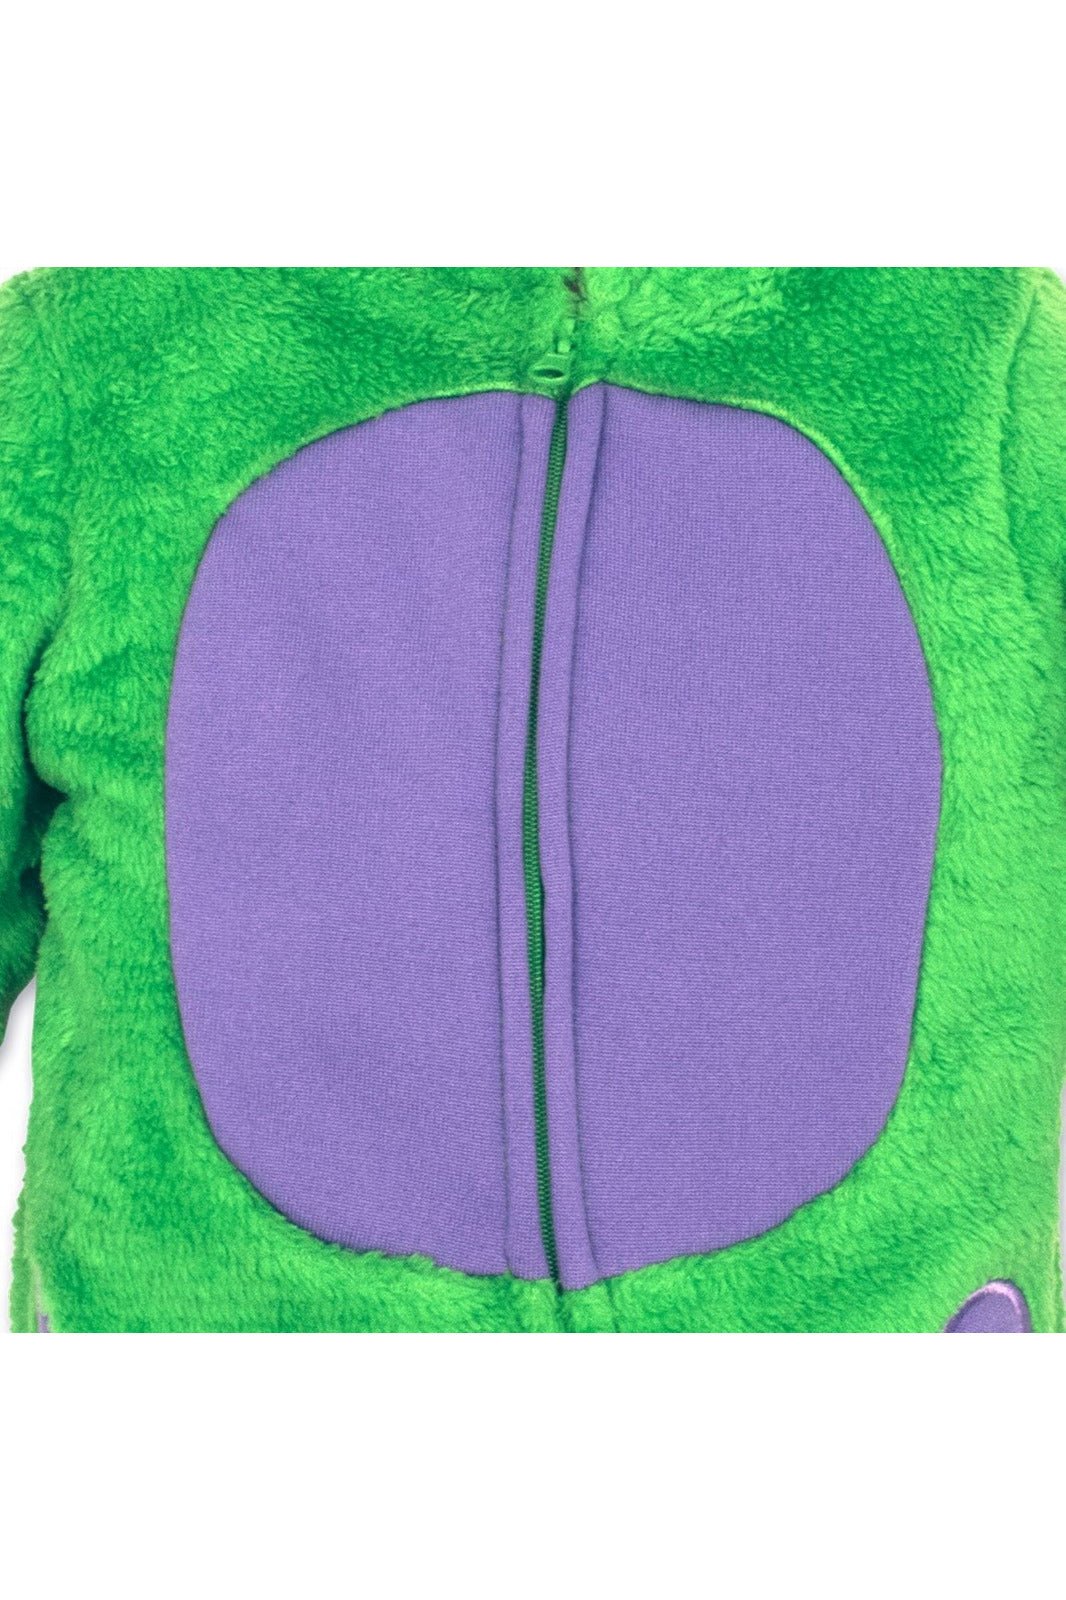 Funstuff Funstuff Dinosaur Fleece Zip Up Cosplay Costume Coverall Tail - imagikids